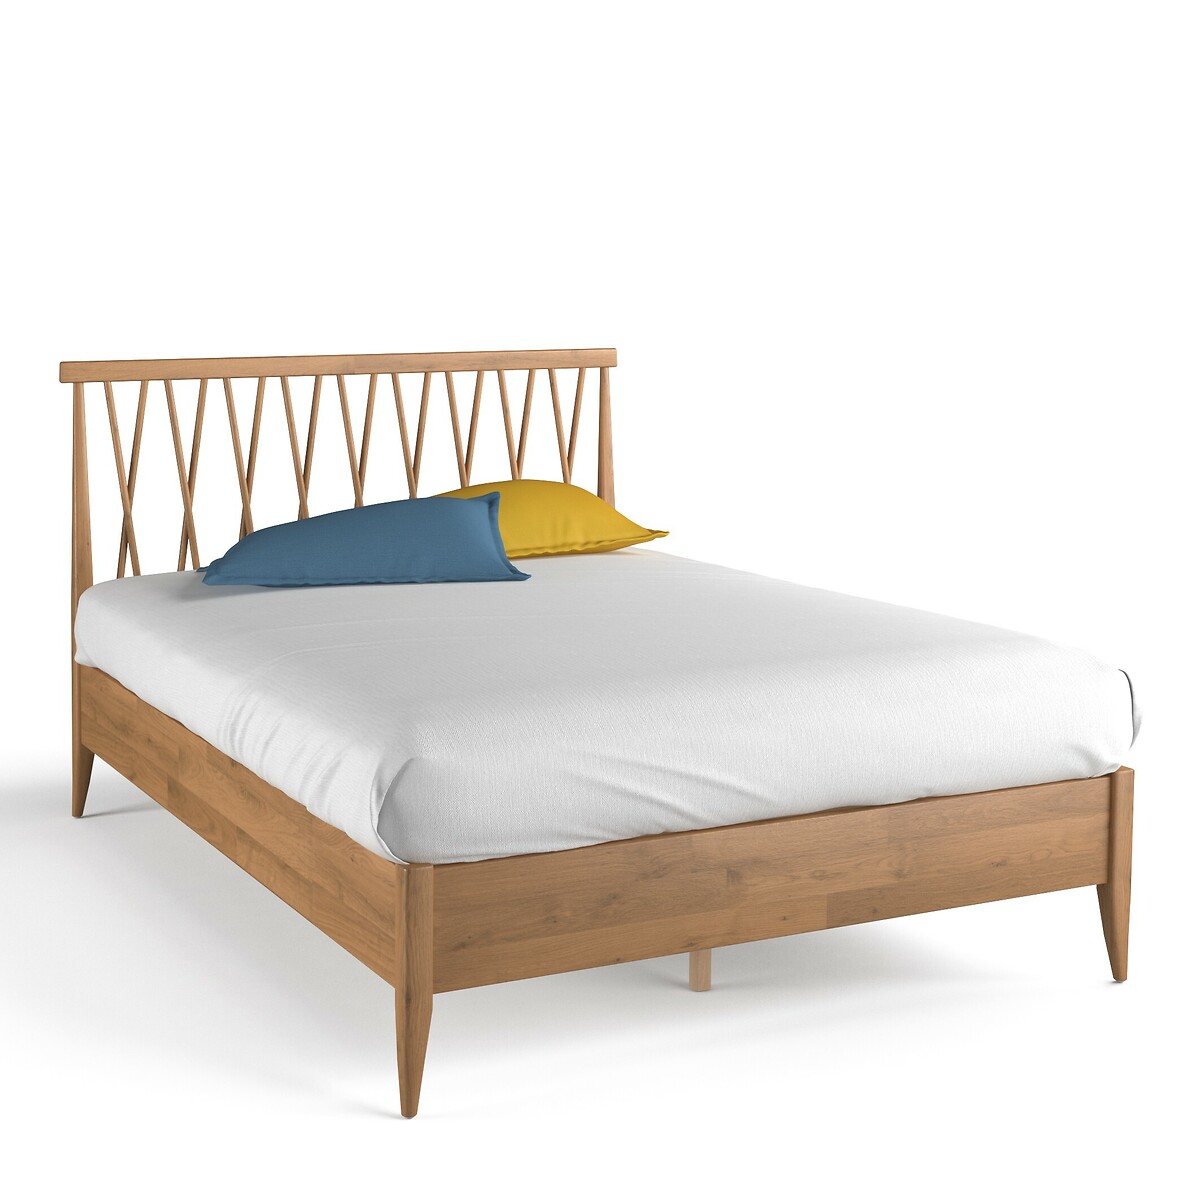 Кровать La Redoute сетка Quilda 140 x 190 см каштановый, размер 140 x 190 см - фото 2